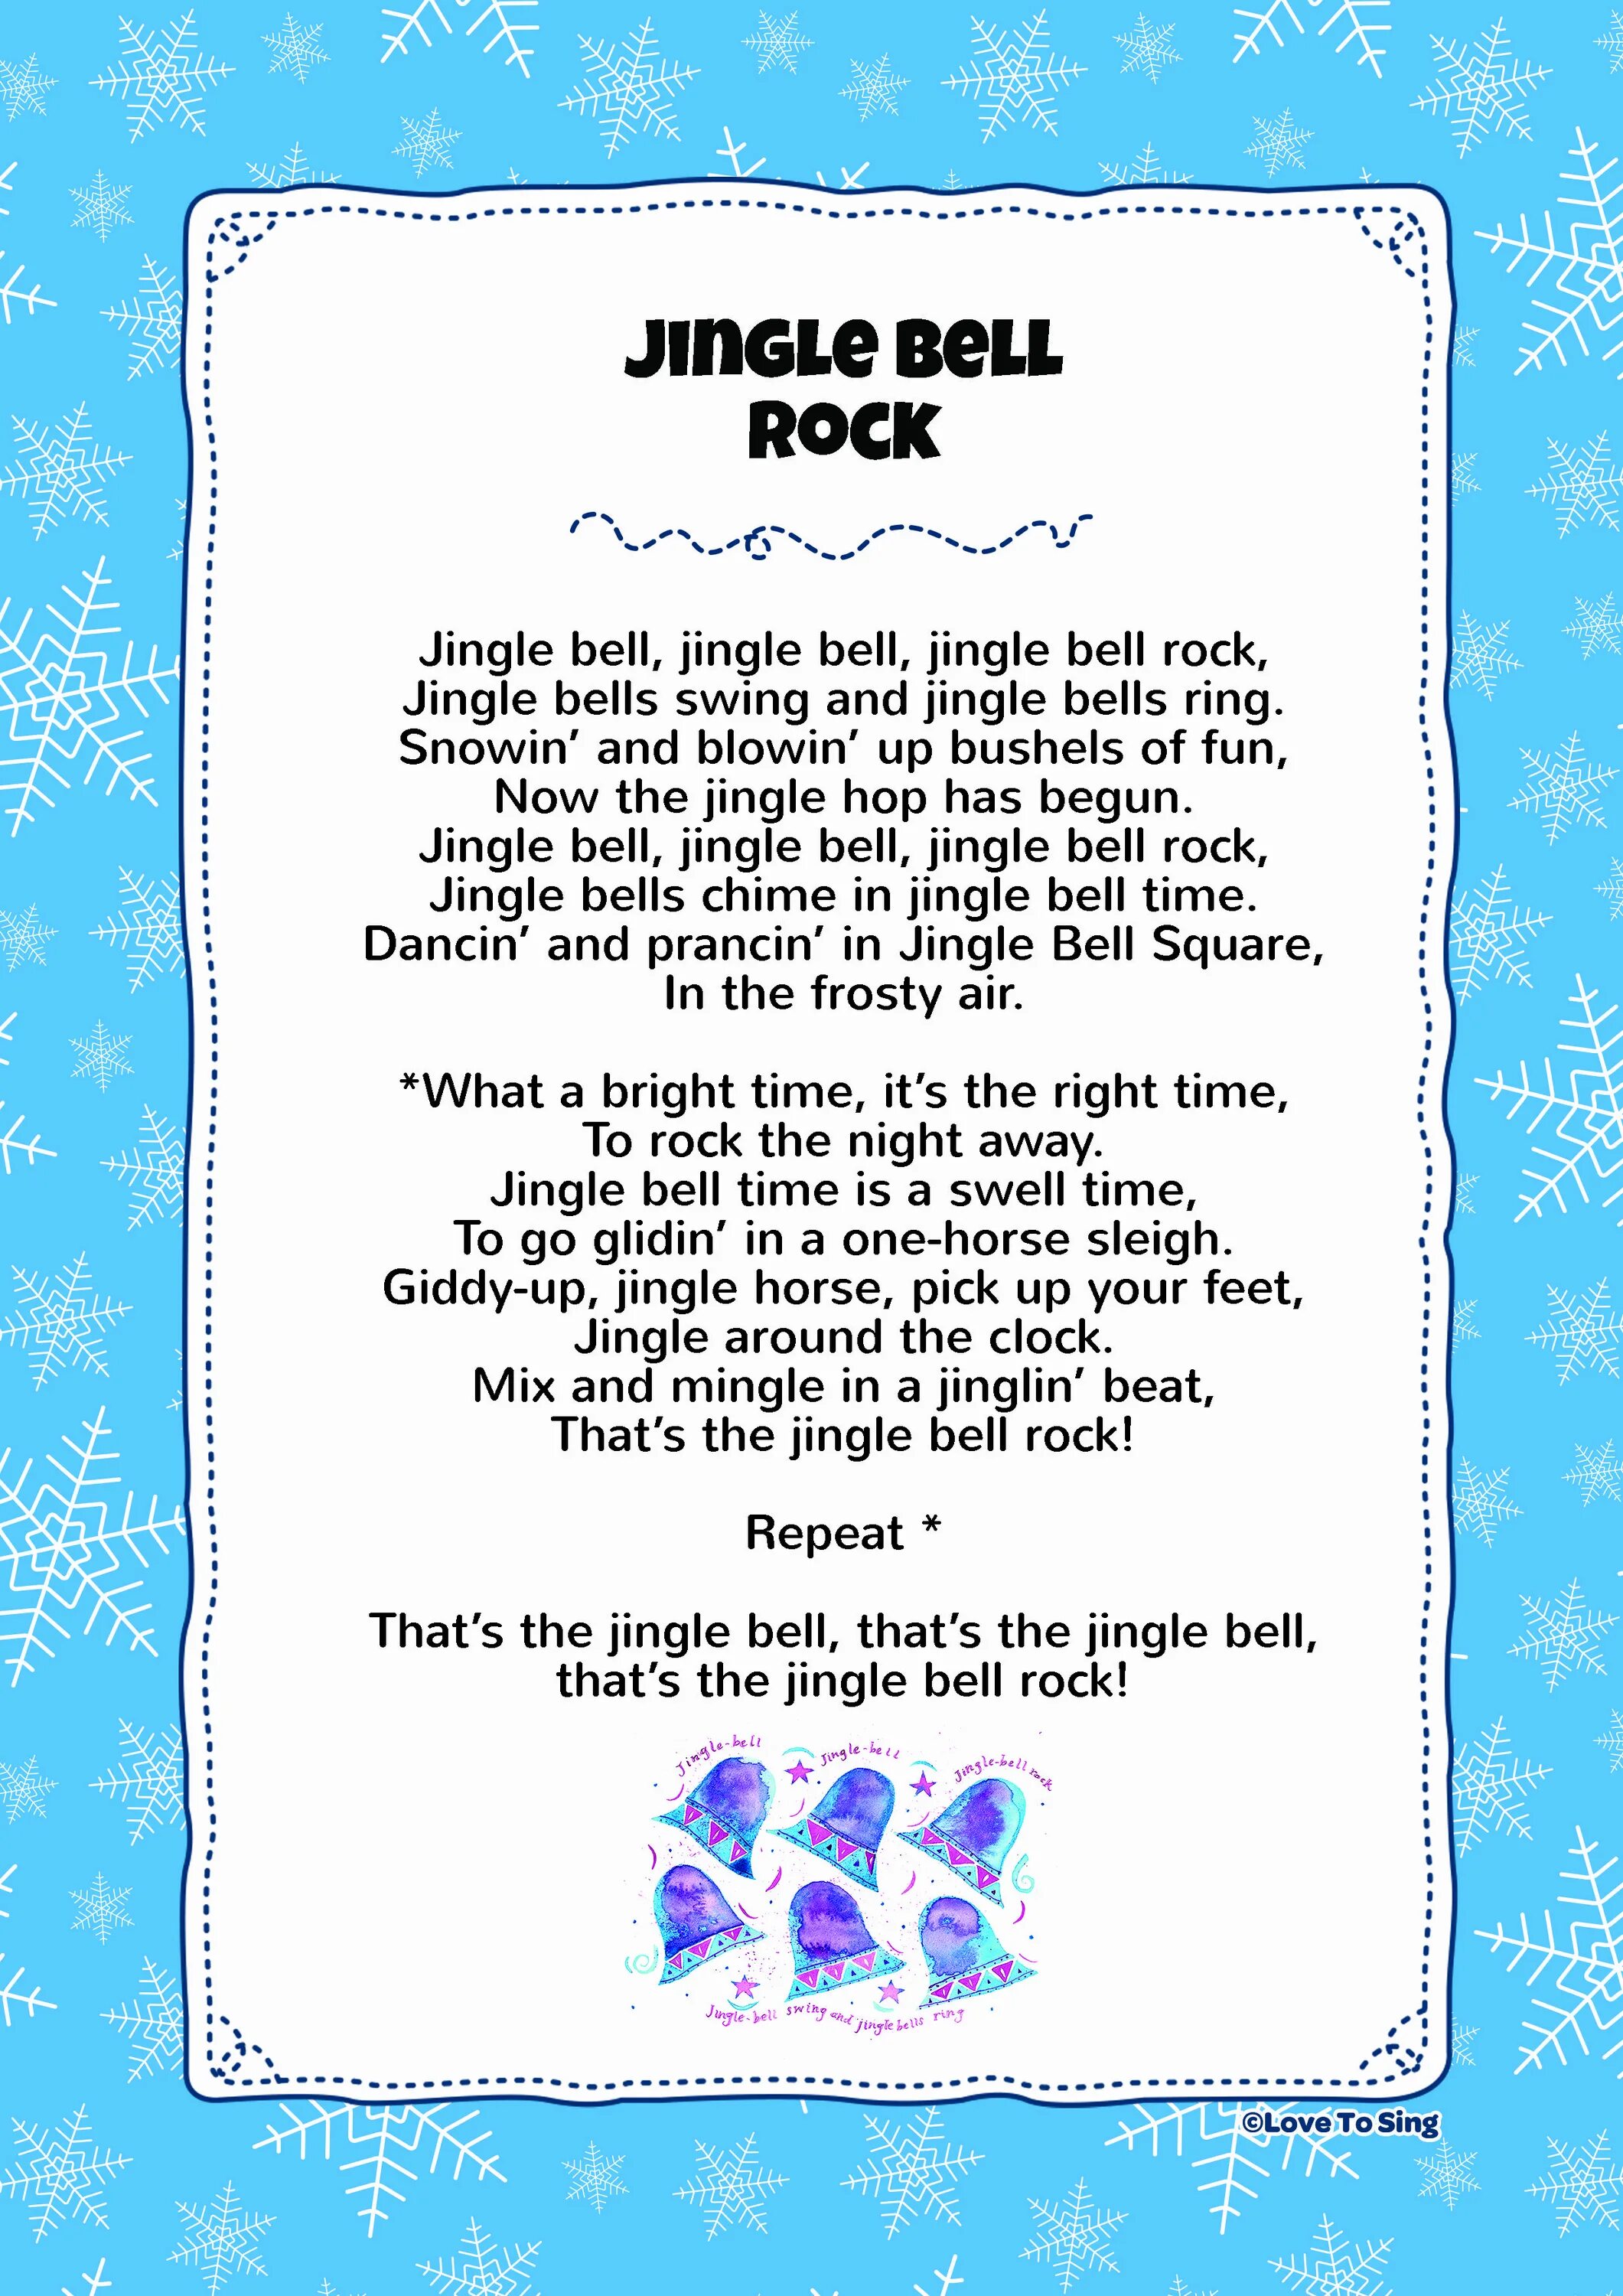 Джингл белс слушать. Jingle Bells Rock слова. Джингл белс рок. Jingle Bells Jingle Bells Jingle Bells Rock текст. Текст песни Jingle Bells Rock.